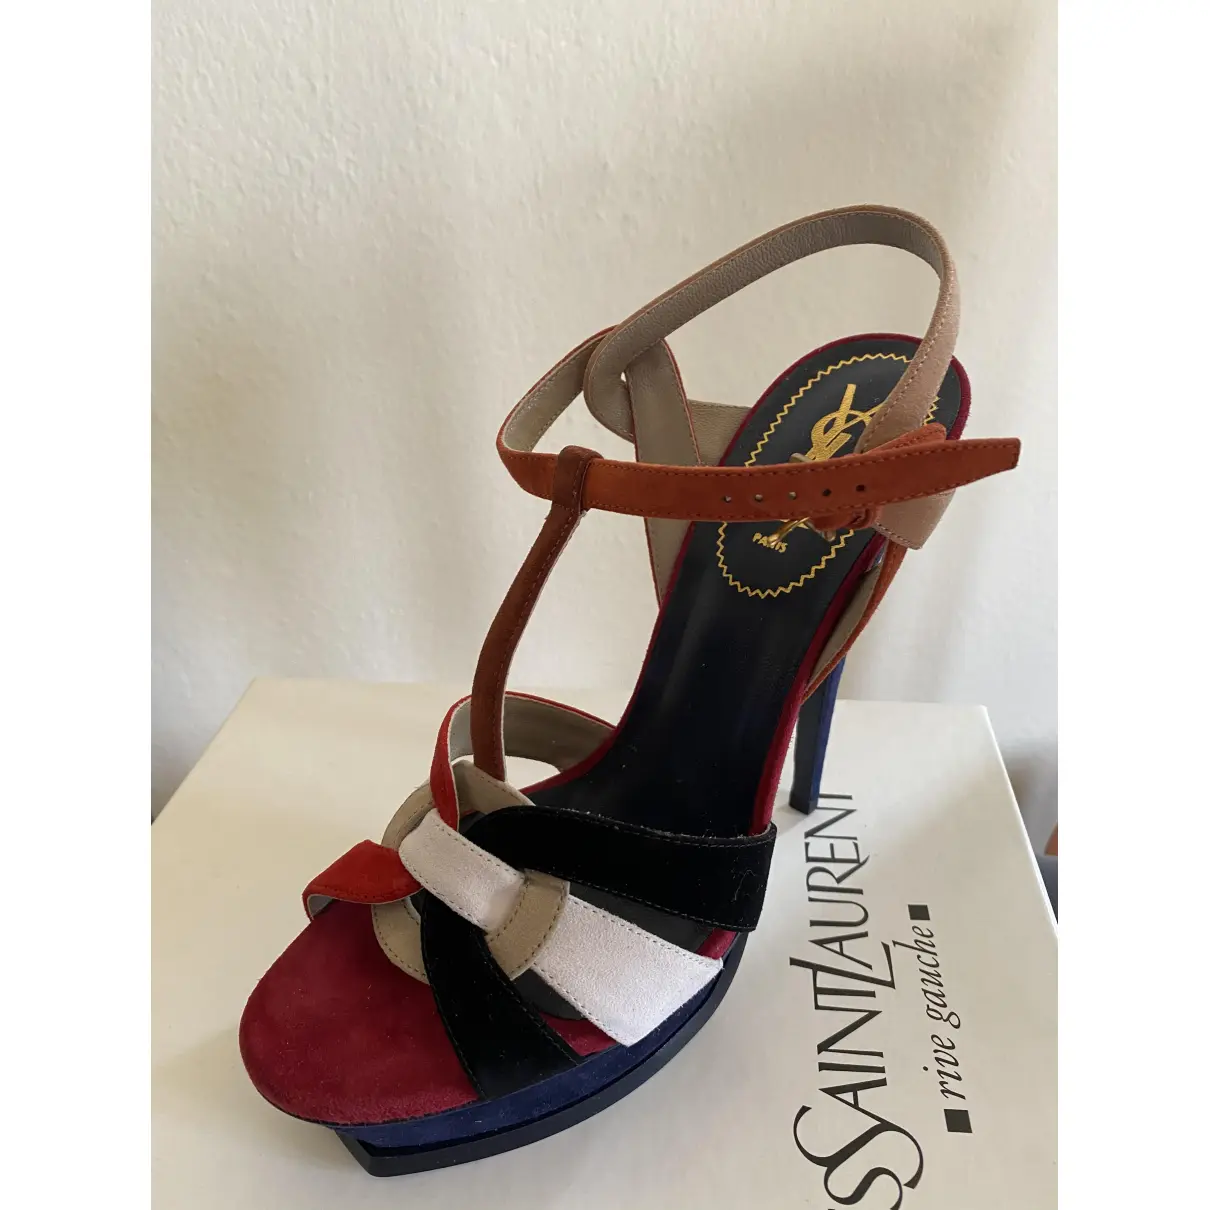 Buy Yves Saint Laurent Tribute sandals online